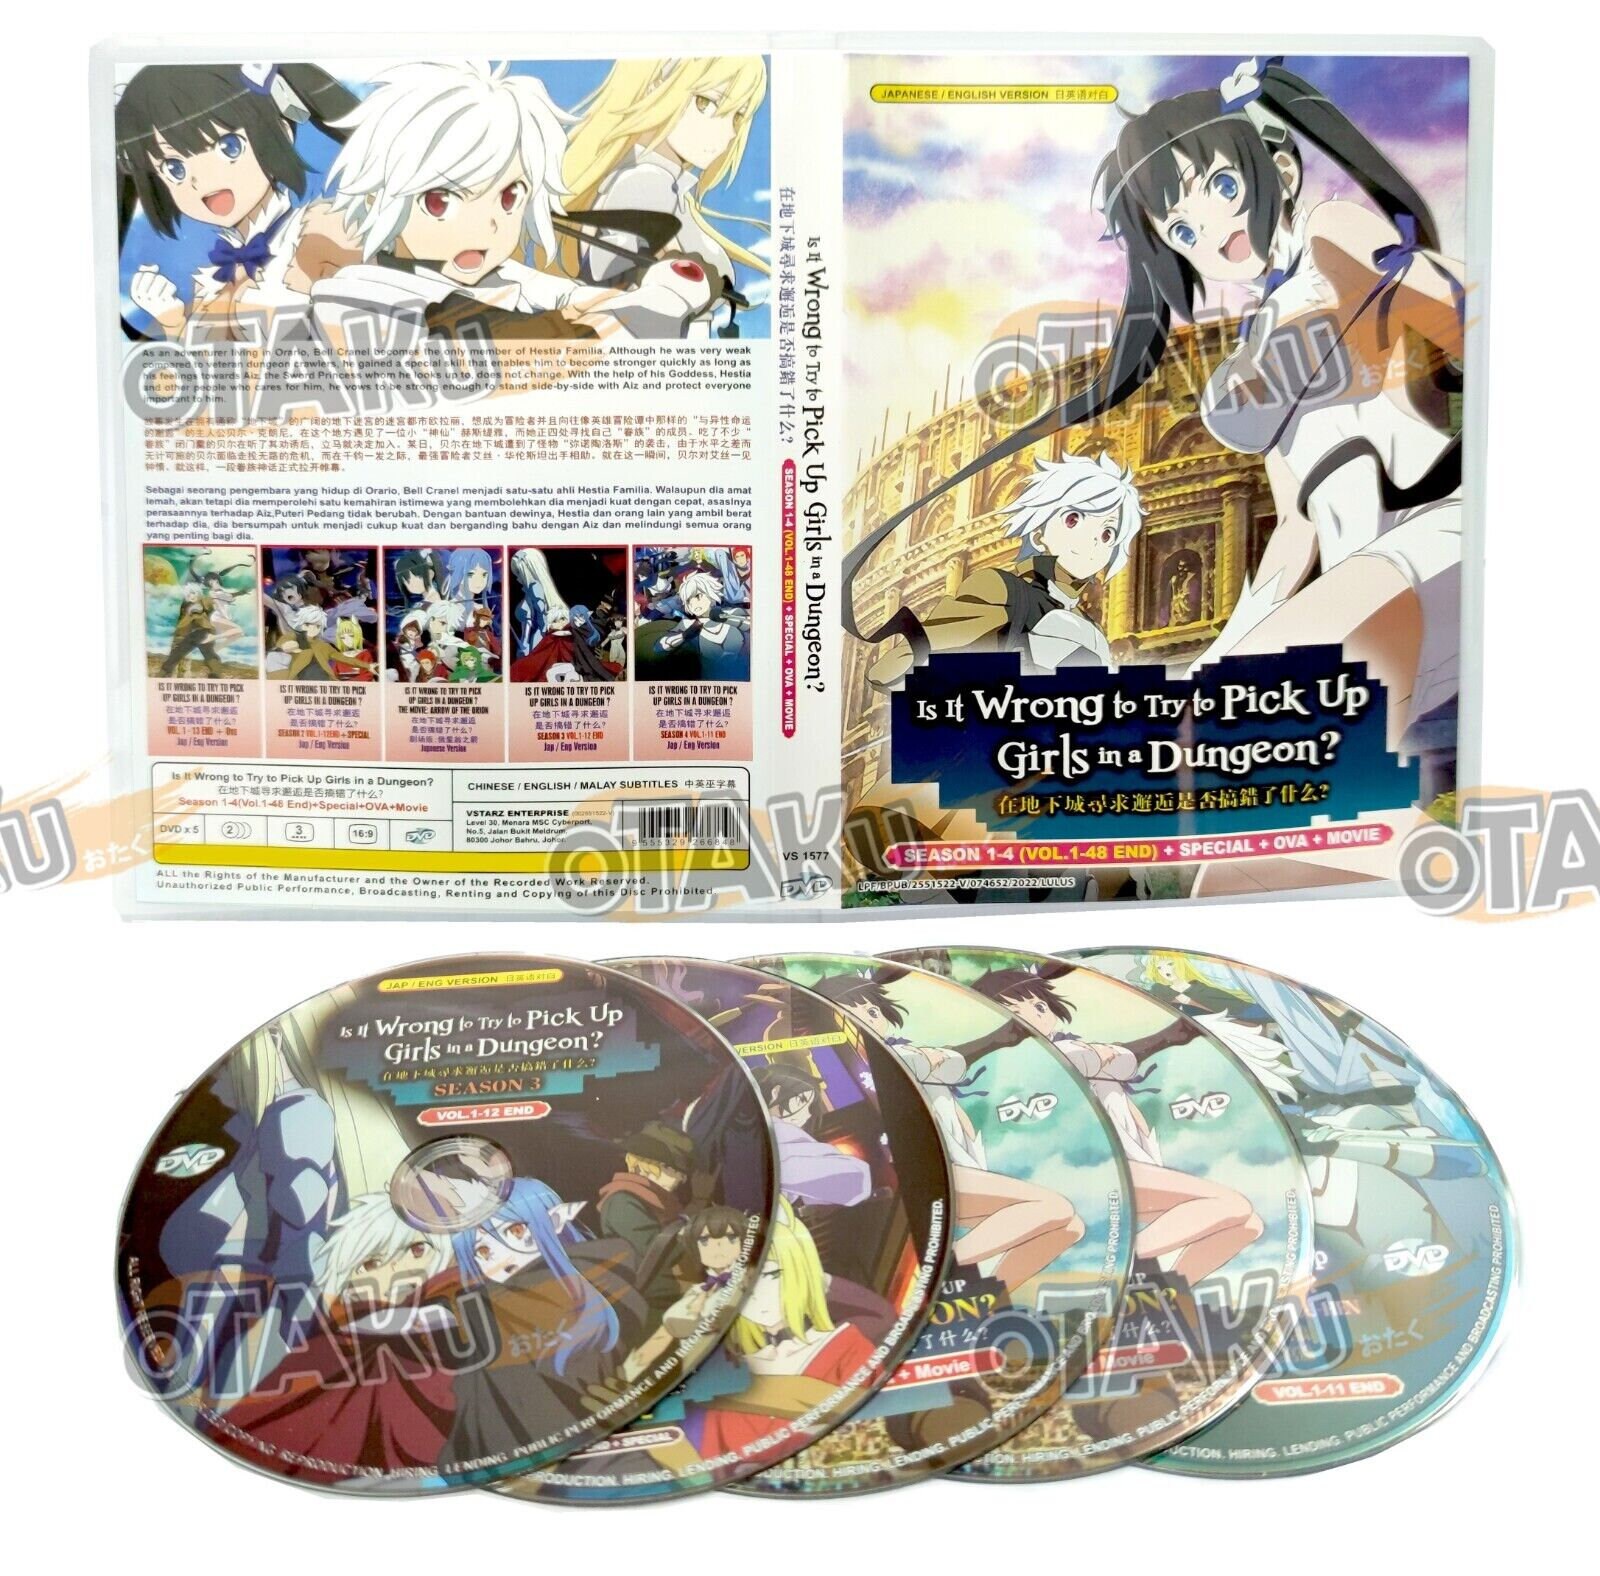 DVD Leadale No Daichi Nite (Vol.1-12 End) English Subtitle All Region